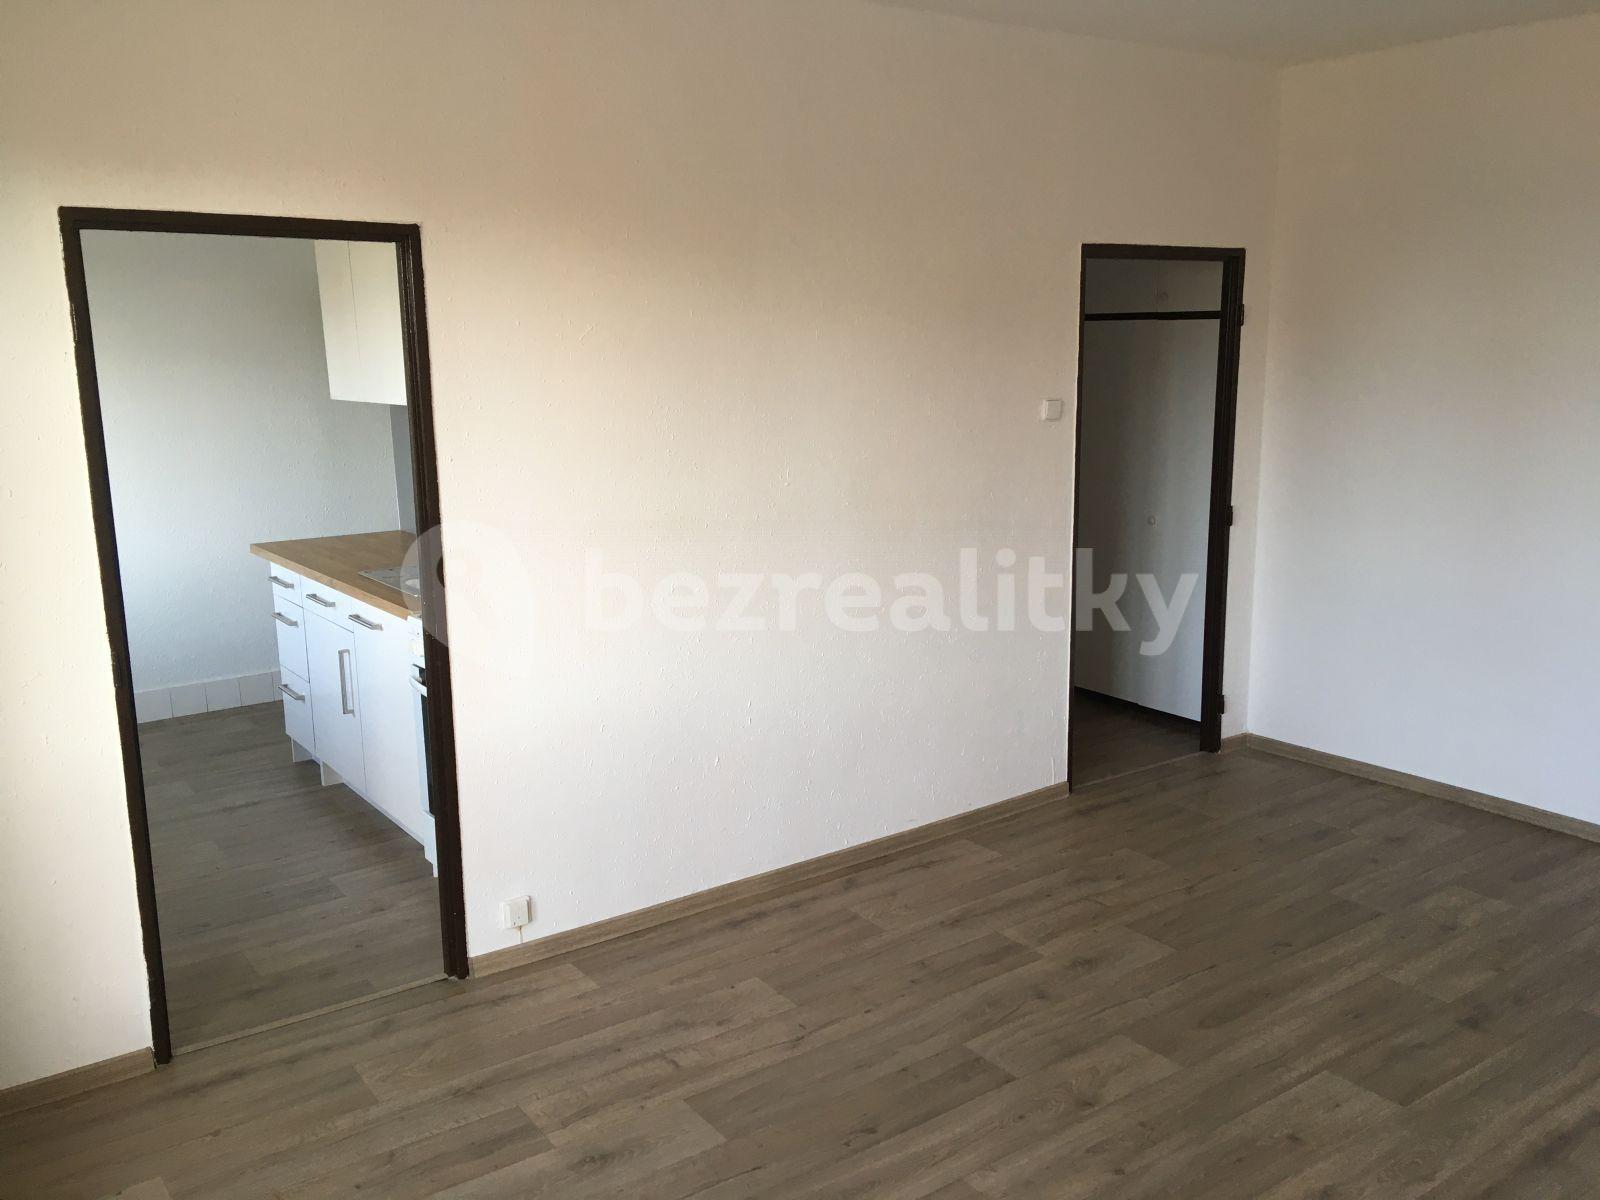 2 bedroom flat to rent, 54 m², Ostrava, Moravskoslezský Region